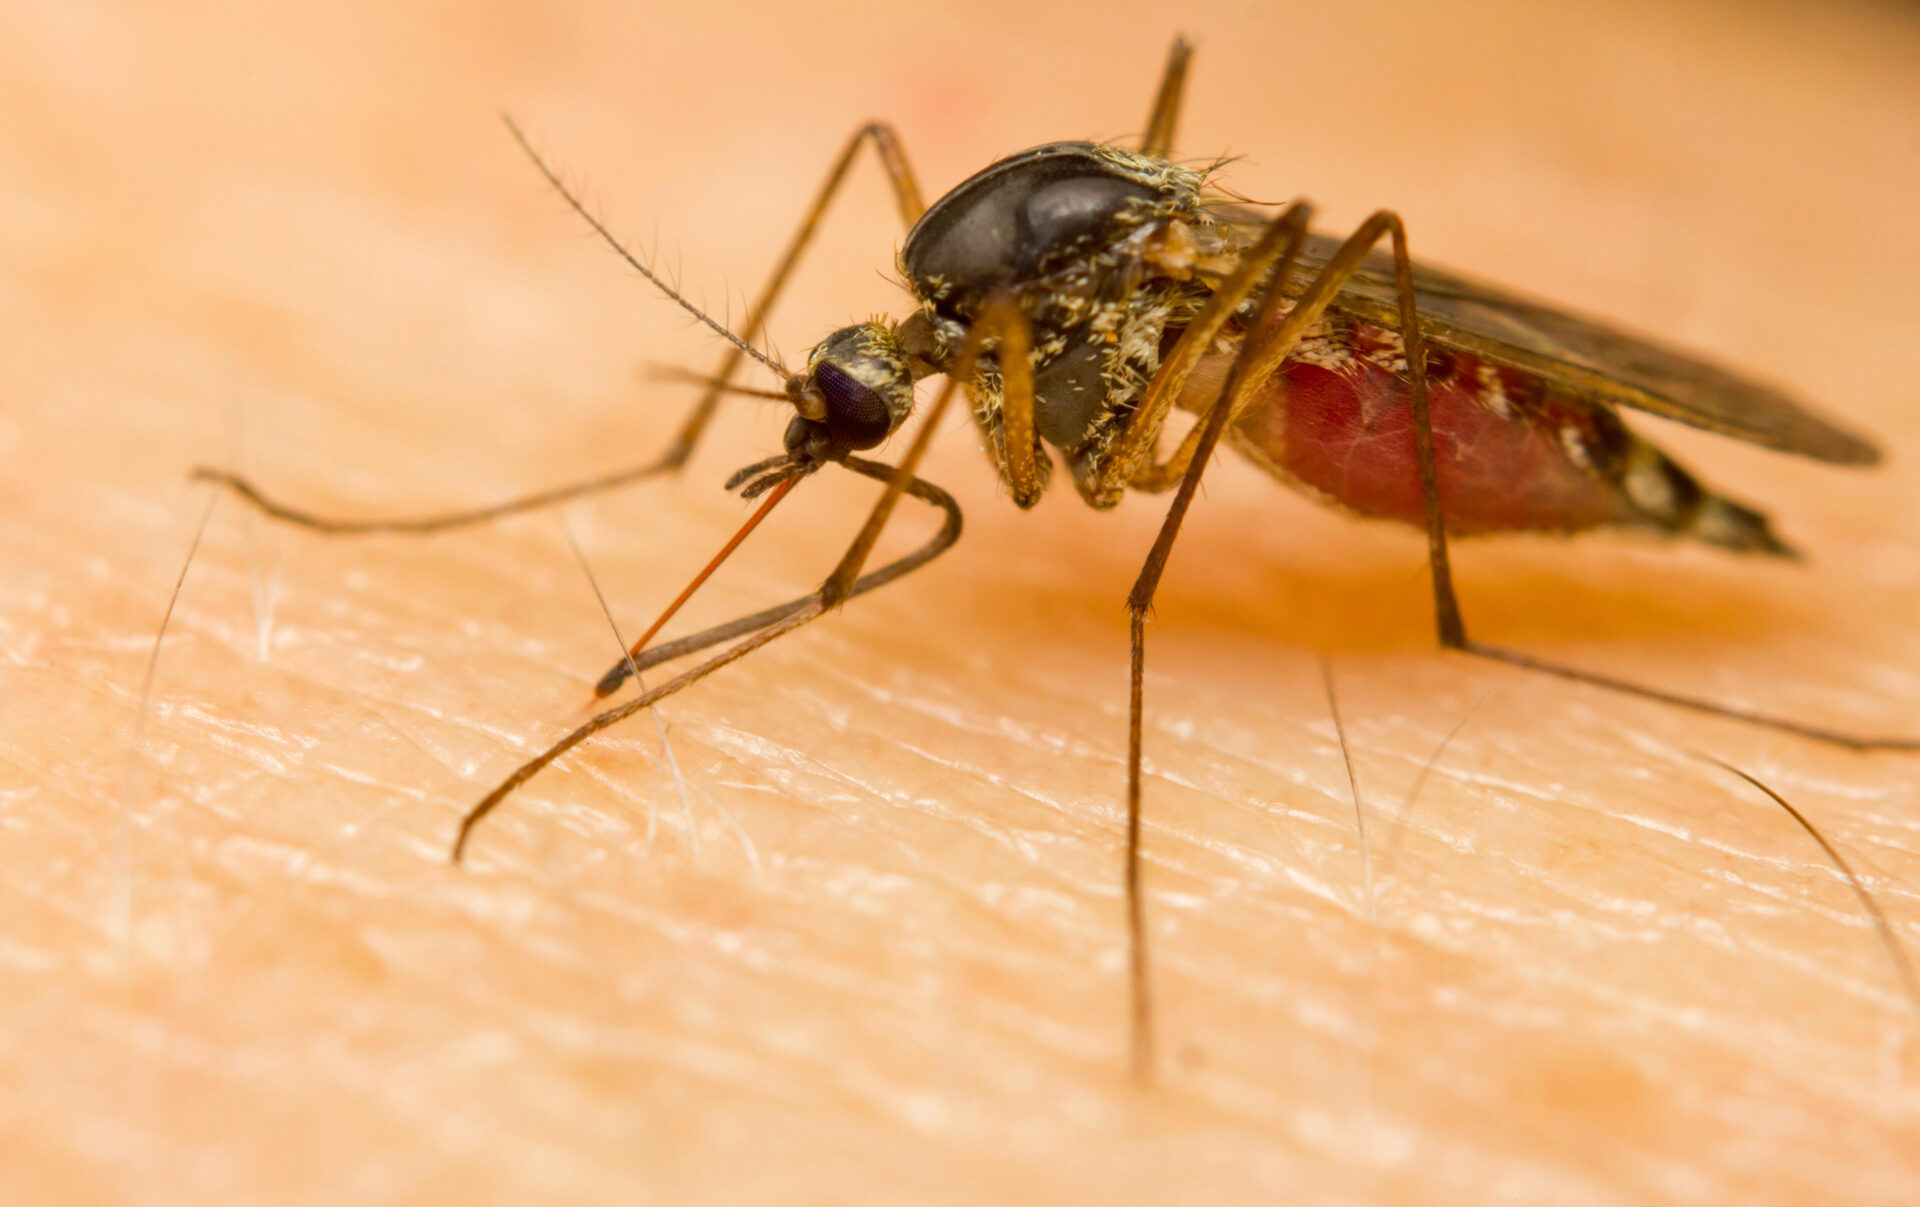 Mosquito sucking blood New Zealand